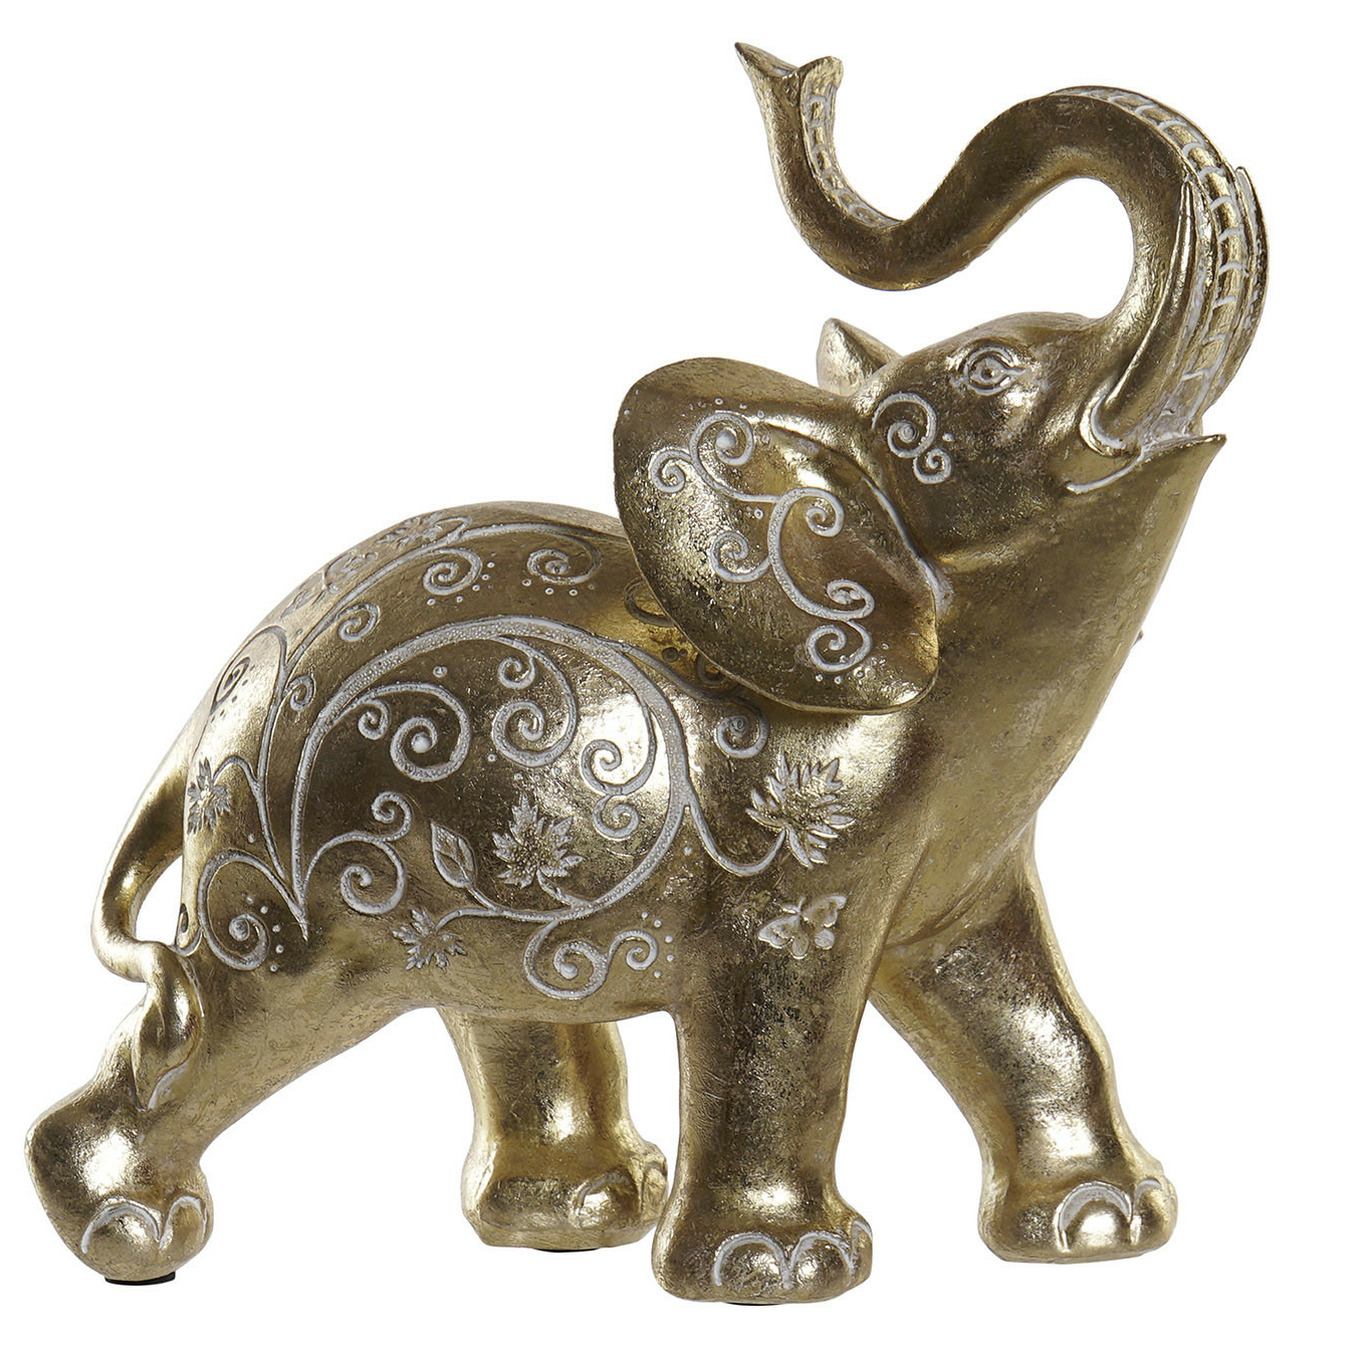 Items Olifant dierenbeeld - goud - polyresin - 25 x 11 x 25 cm - home decoratie -